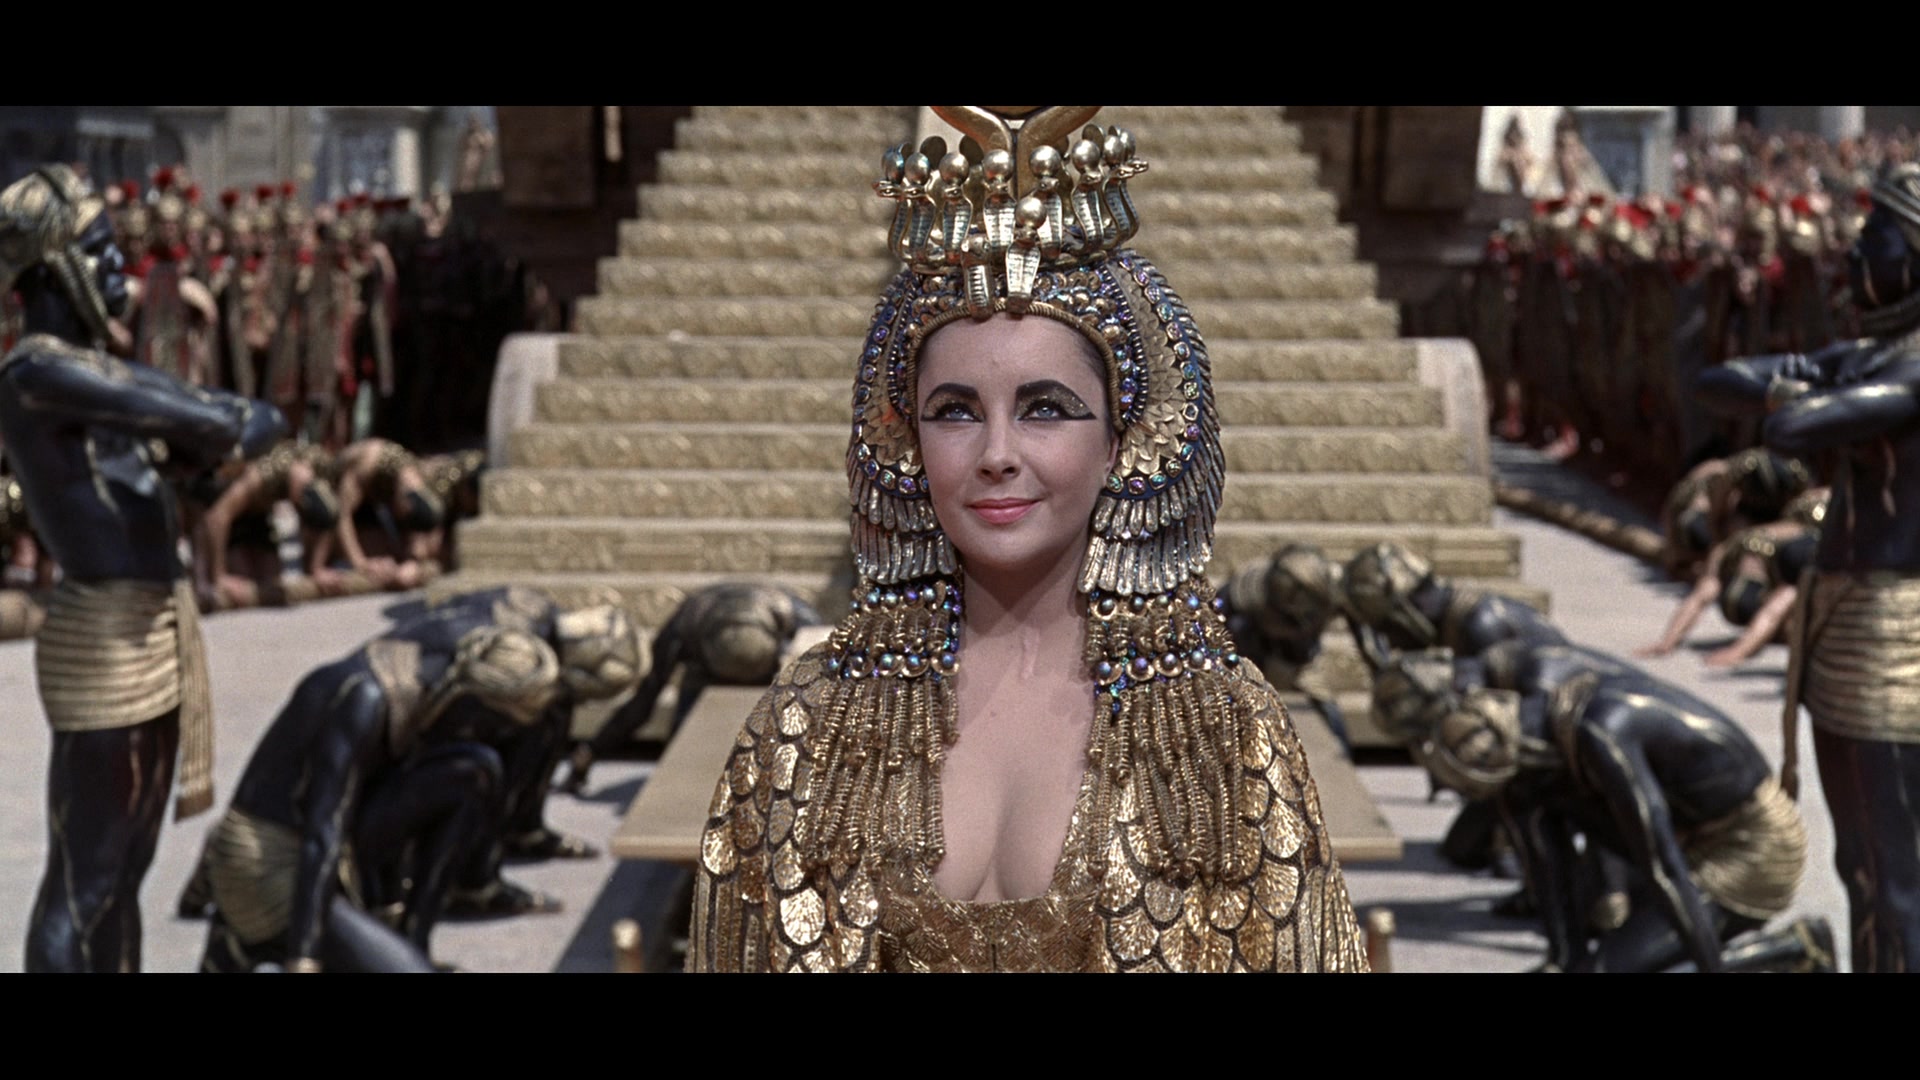 Cleopatra (Elizabeth Taylor) takes the throne in Cleopatra (1963), 20th Century Fox